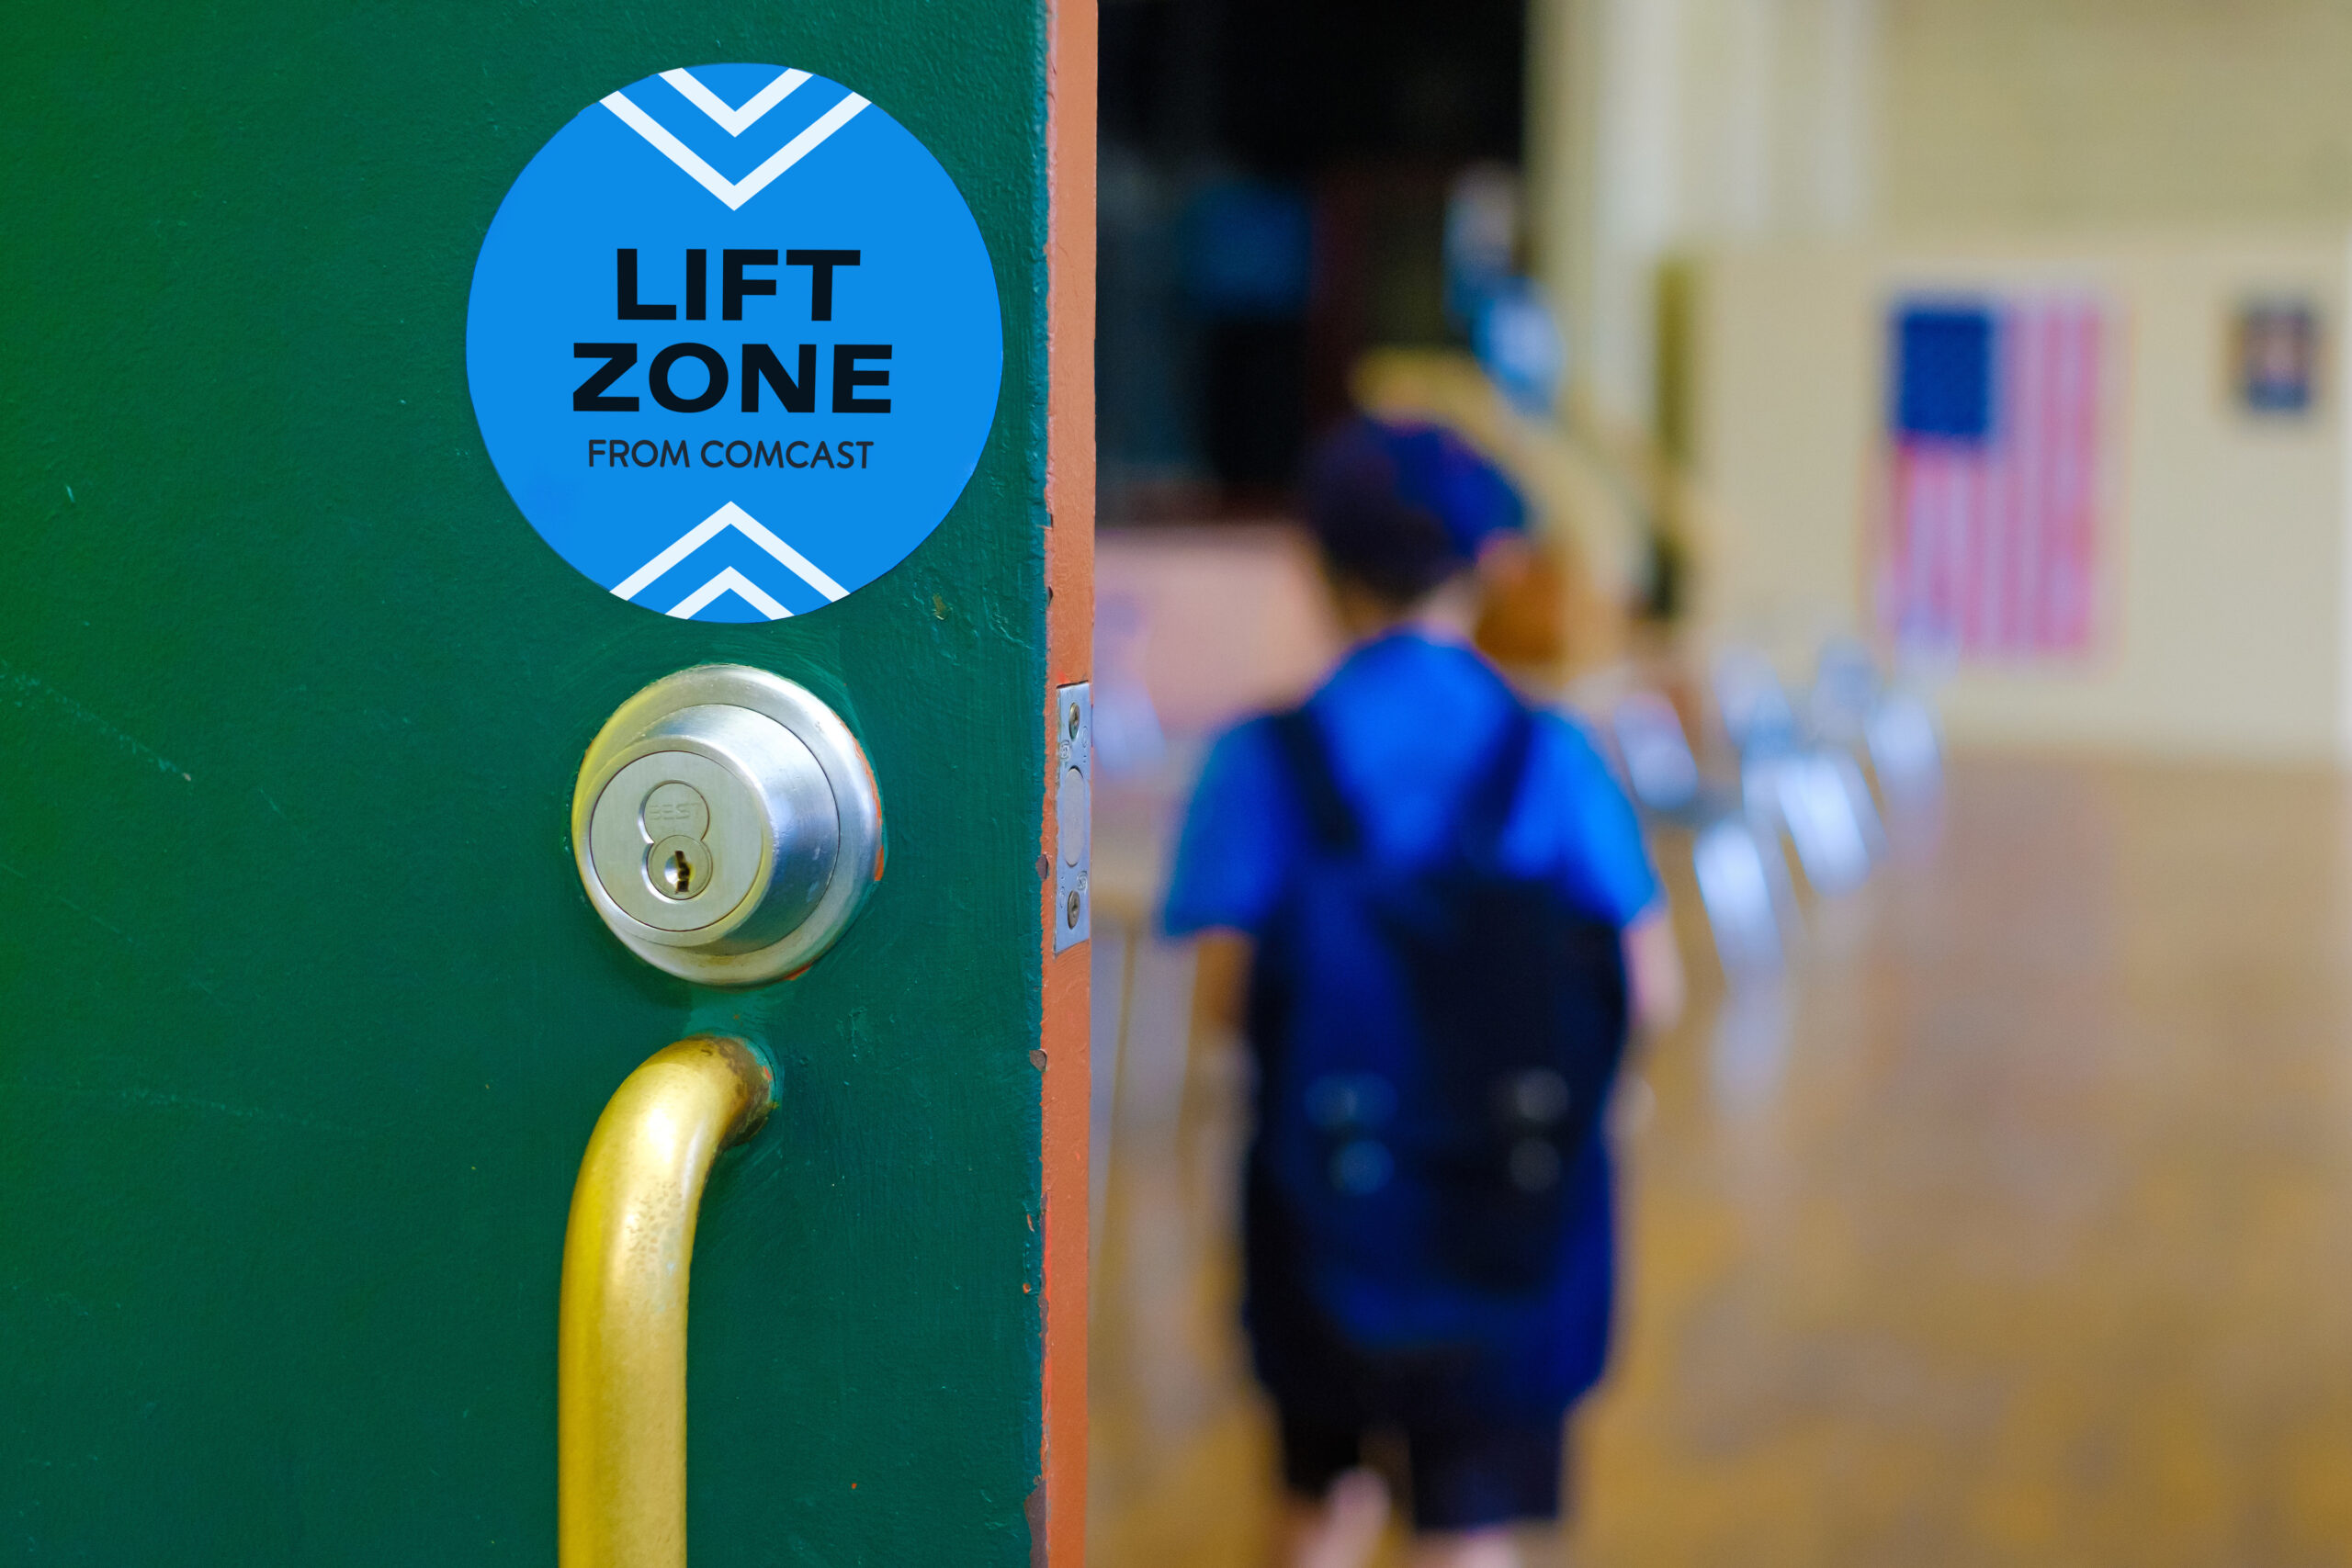 Lift Zone sticker on outside of classroom door